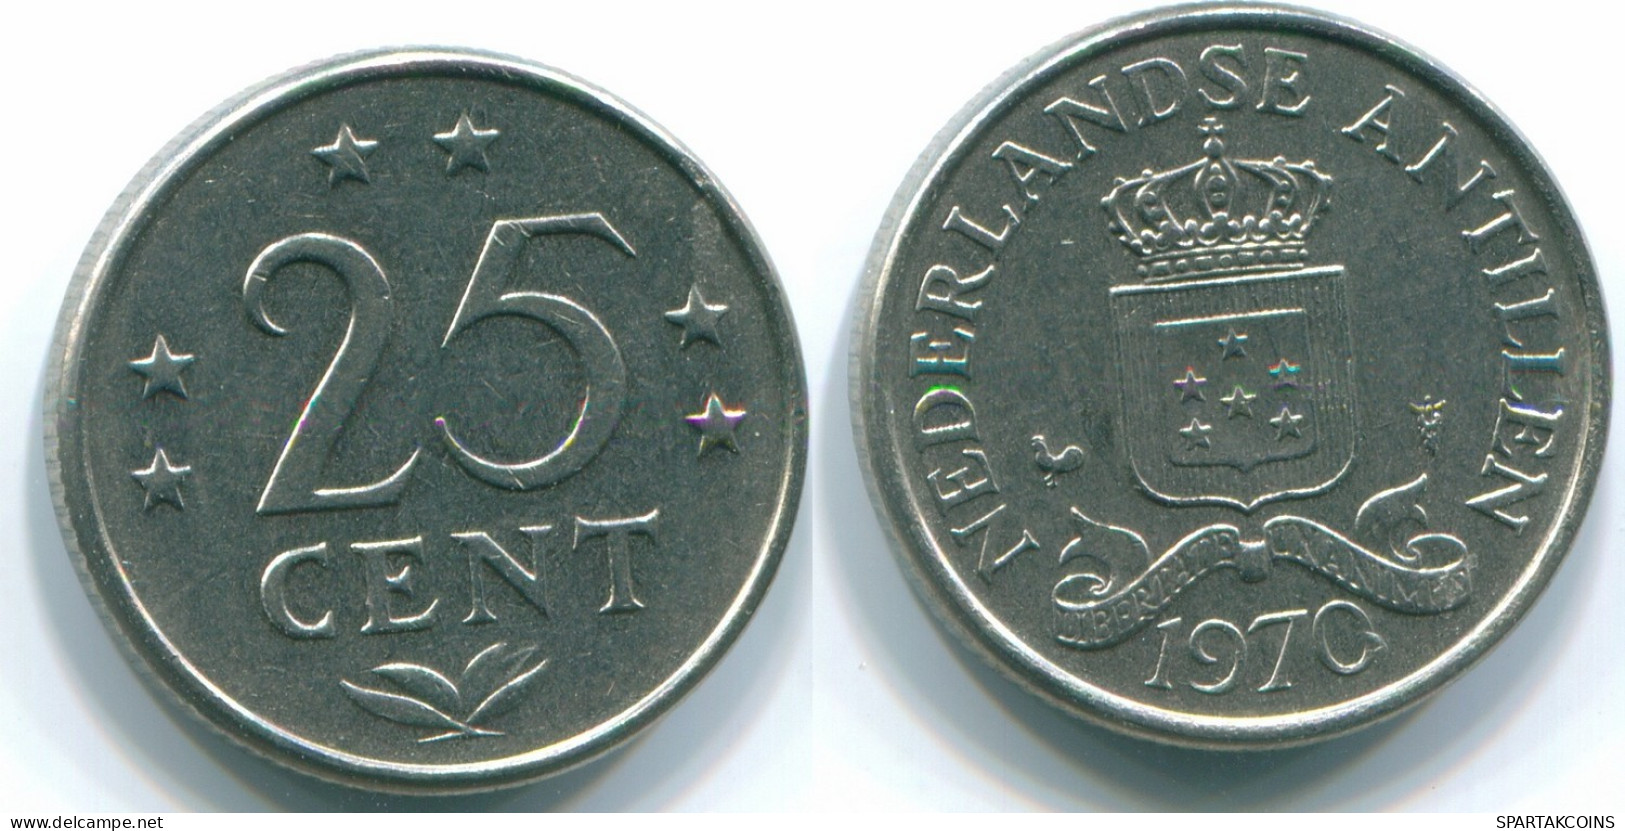 25 CENTS 1970 NETHERLANDS ANTILLES Nickel Colonial Coin #S11469.U.A - Antilles Néerlandaises